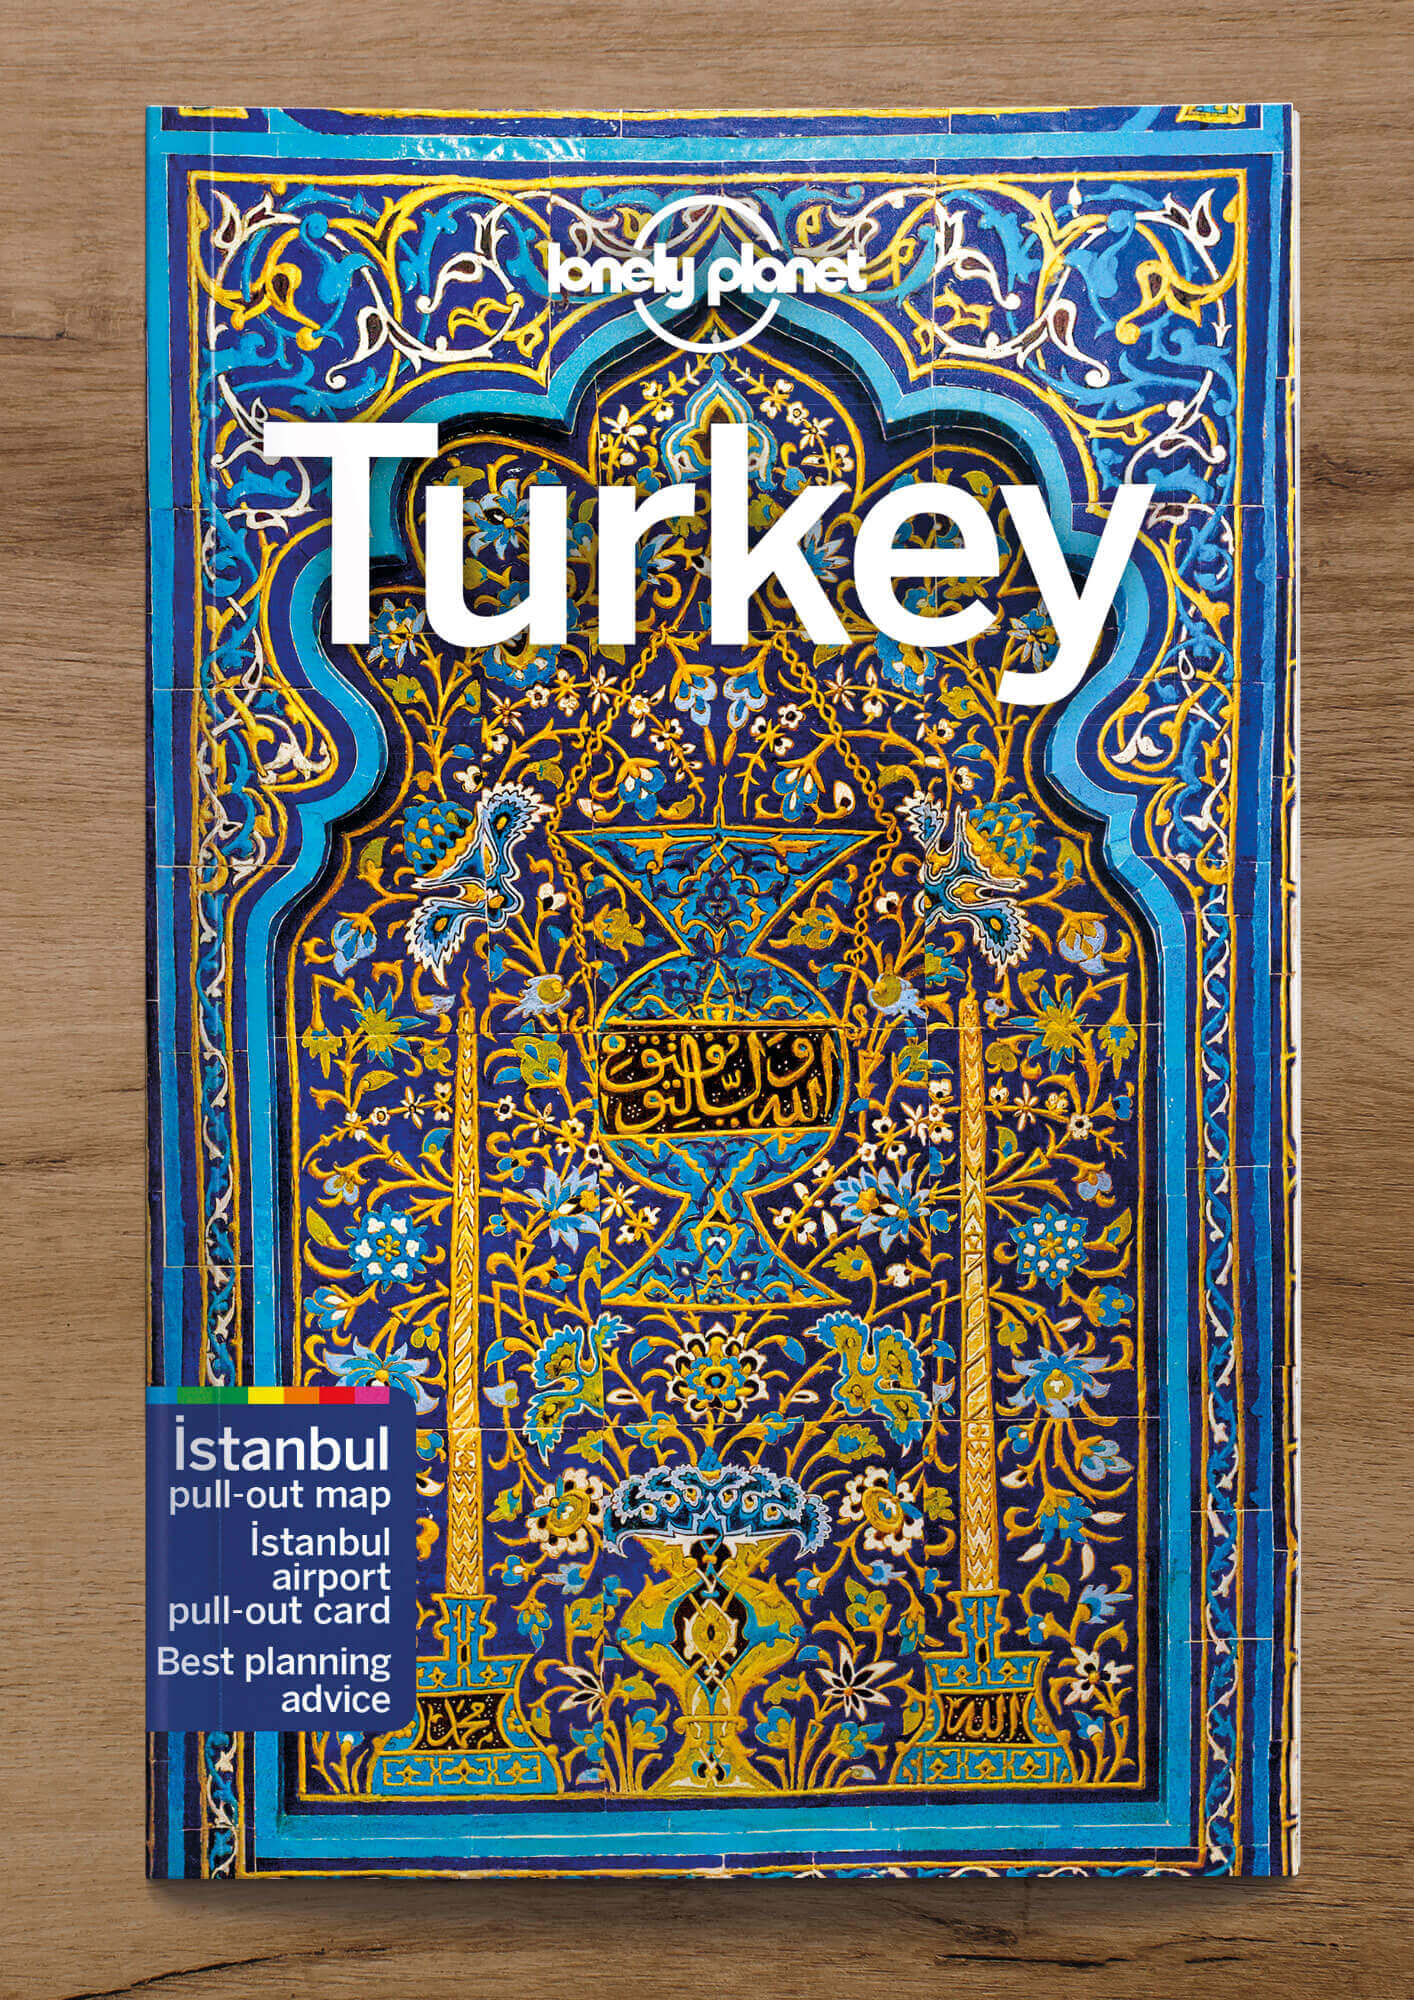  Bestselling Lonelyplanet ebook bundle - Turkey